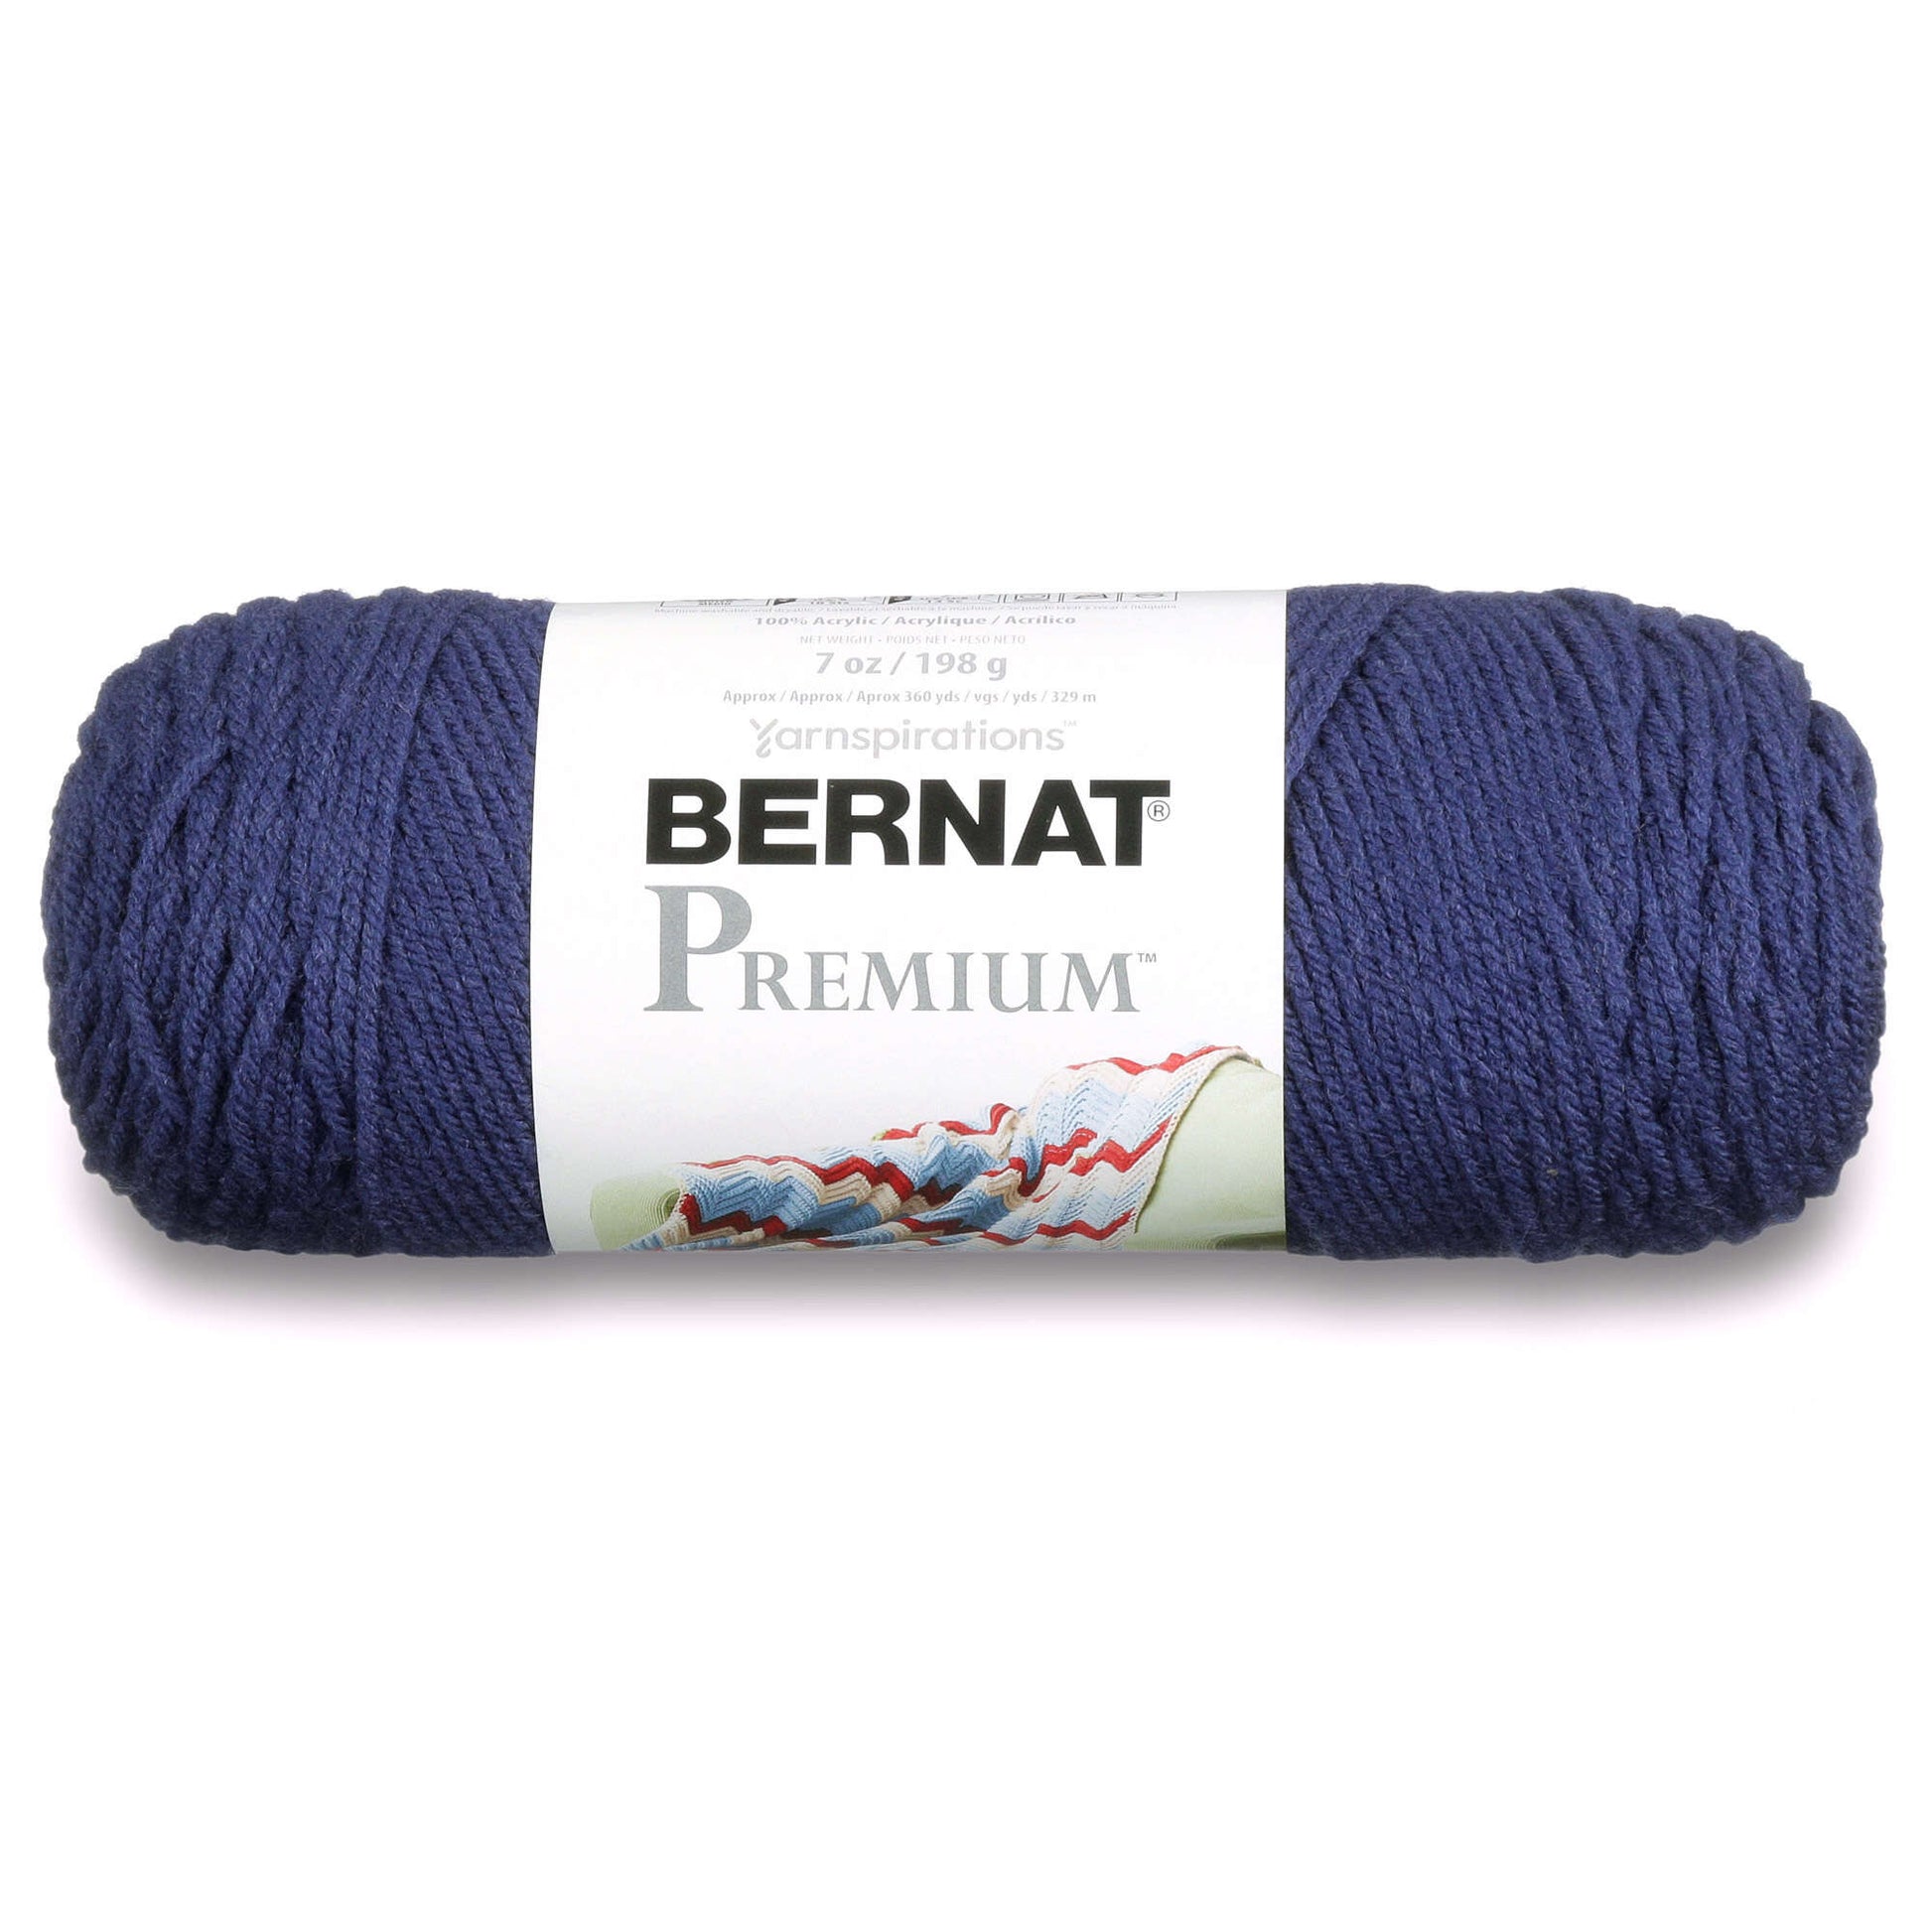 Bernat Premium Yarn Colors | safewindows.co.uk